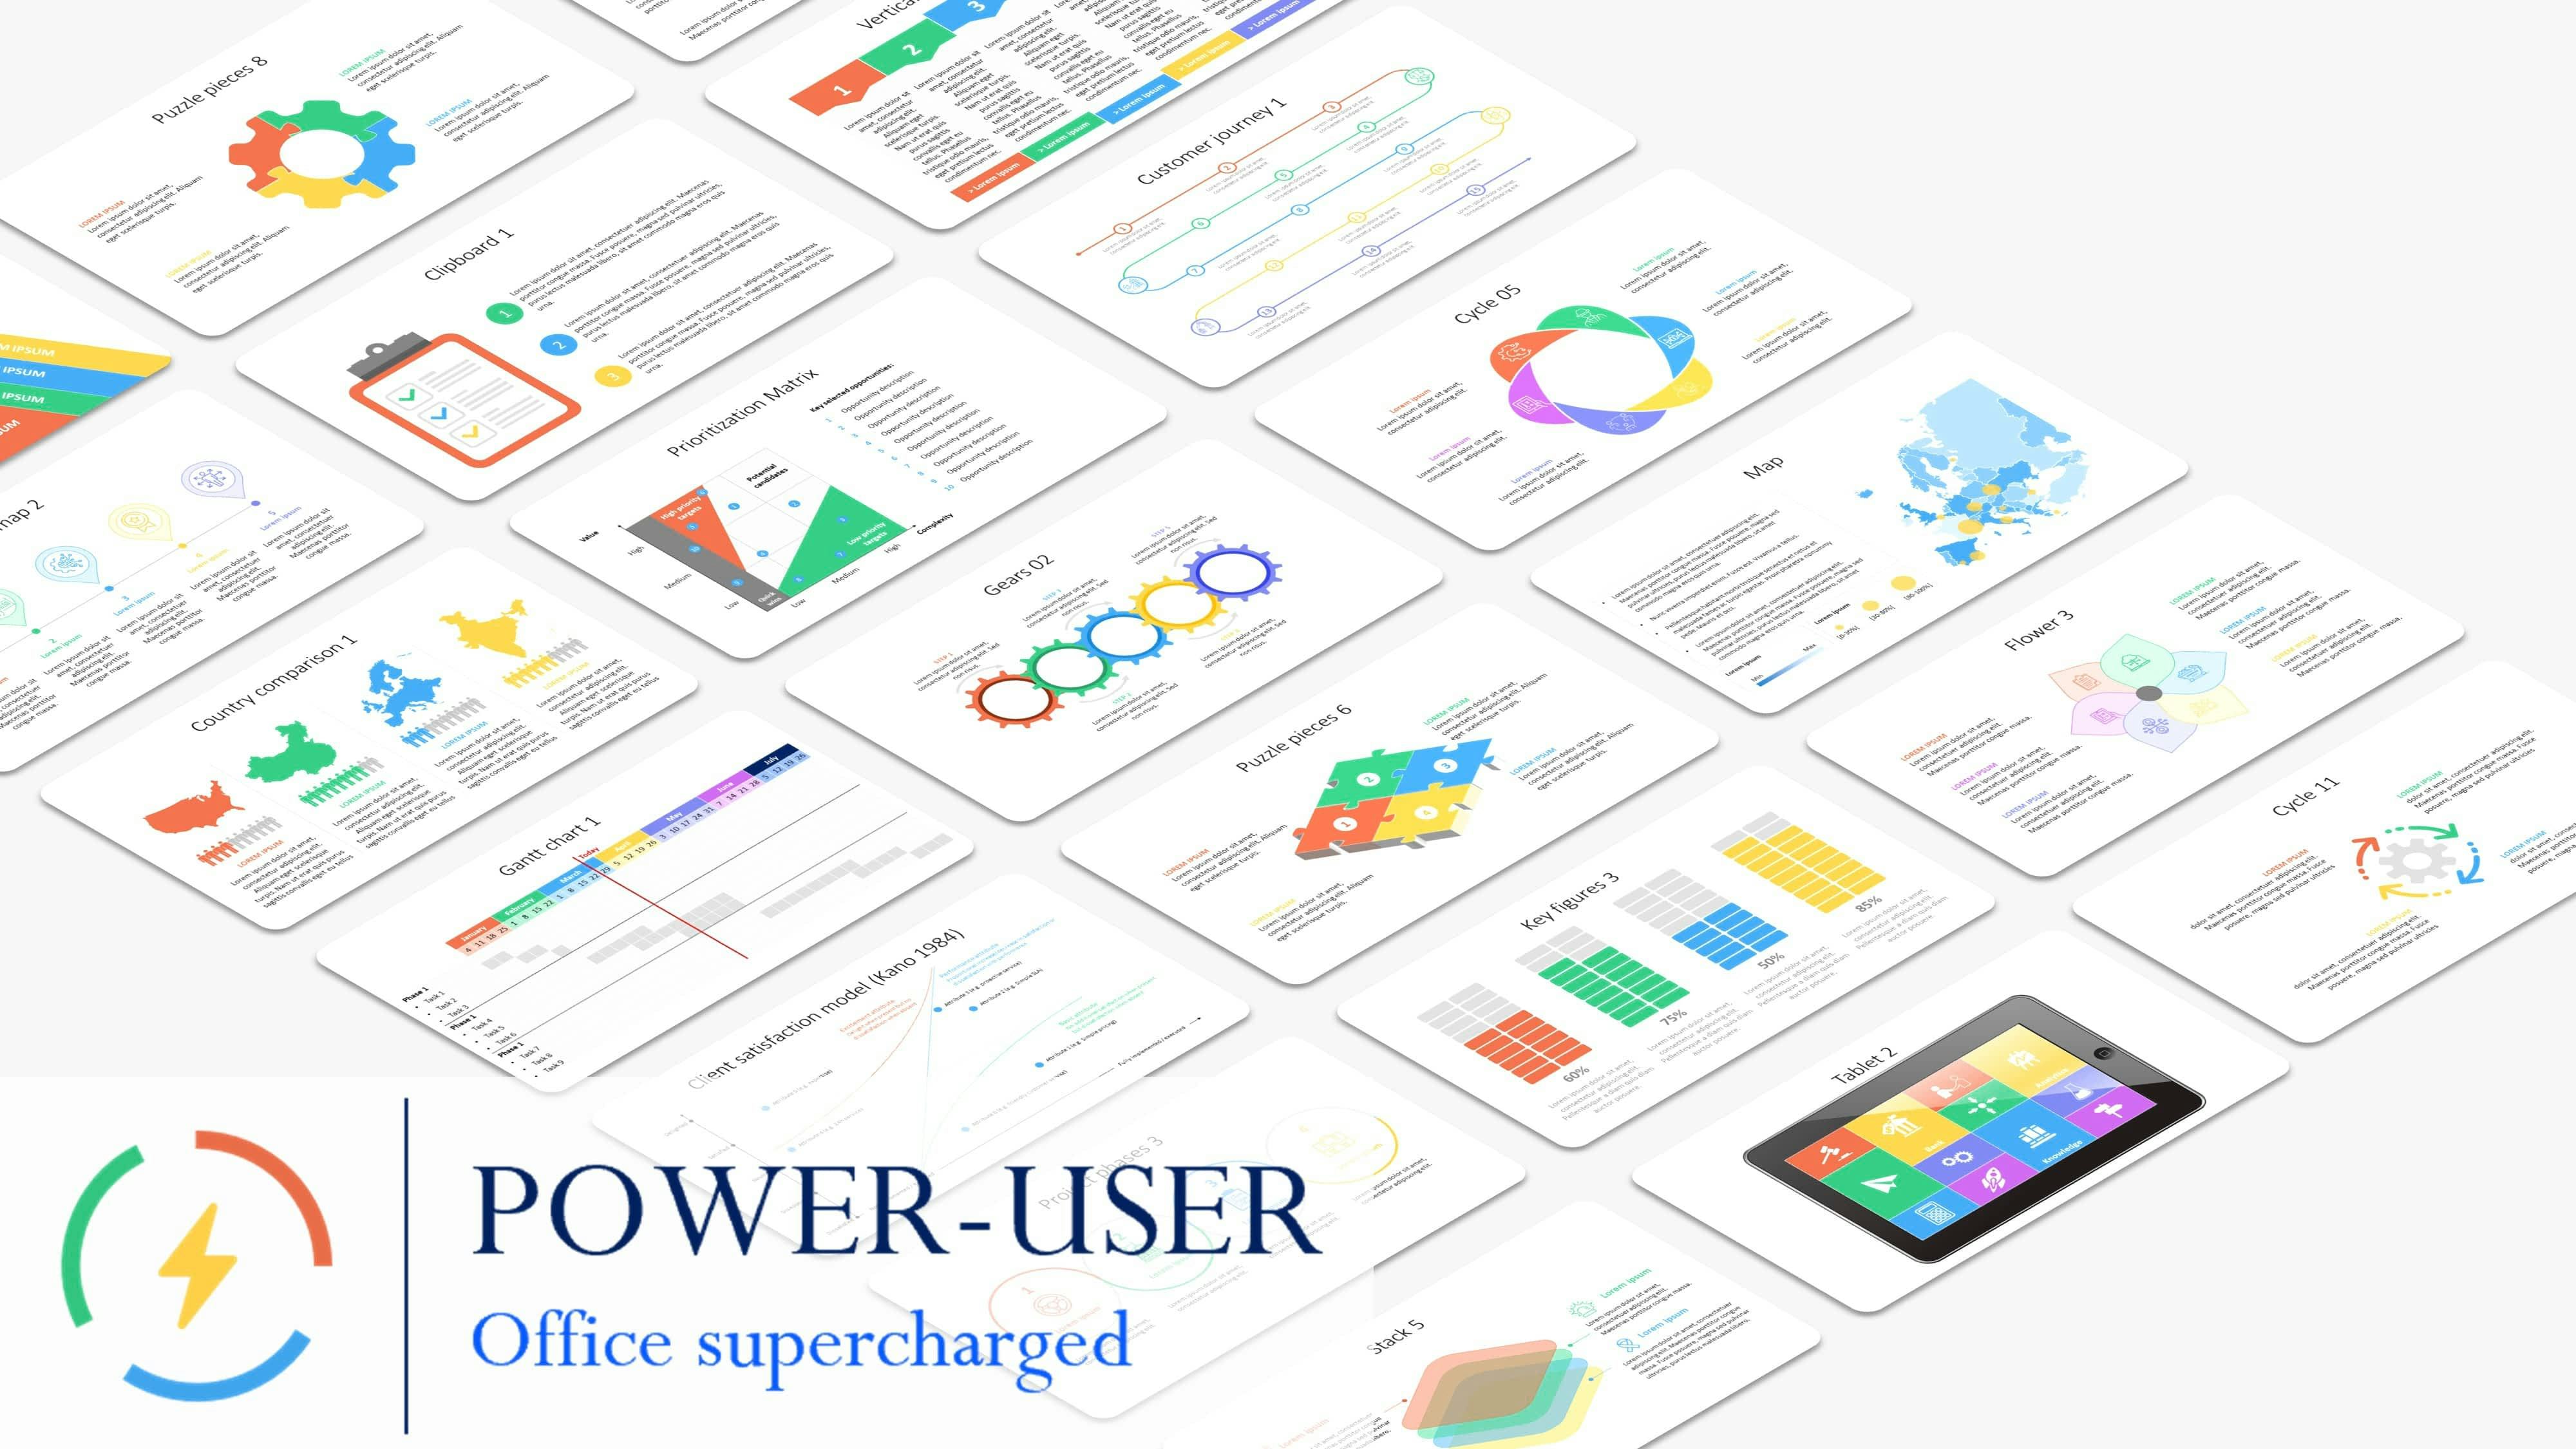 Power-user Software - 500 PowerPoint templates